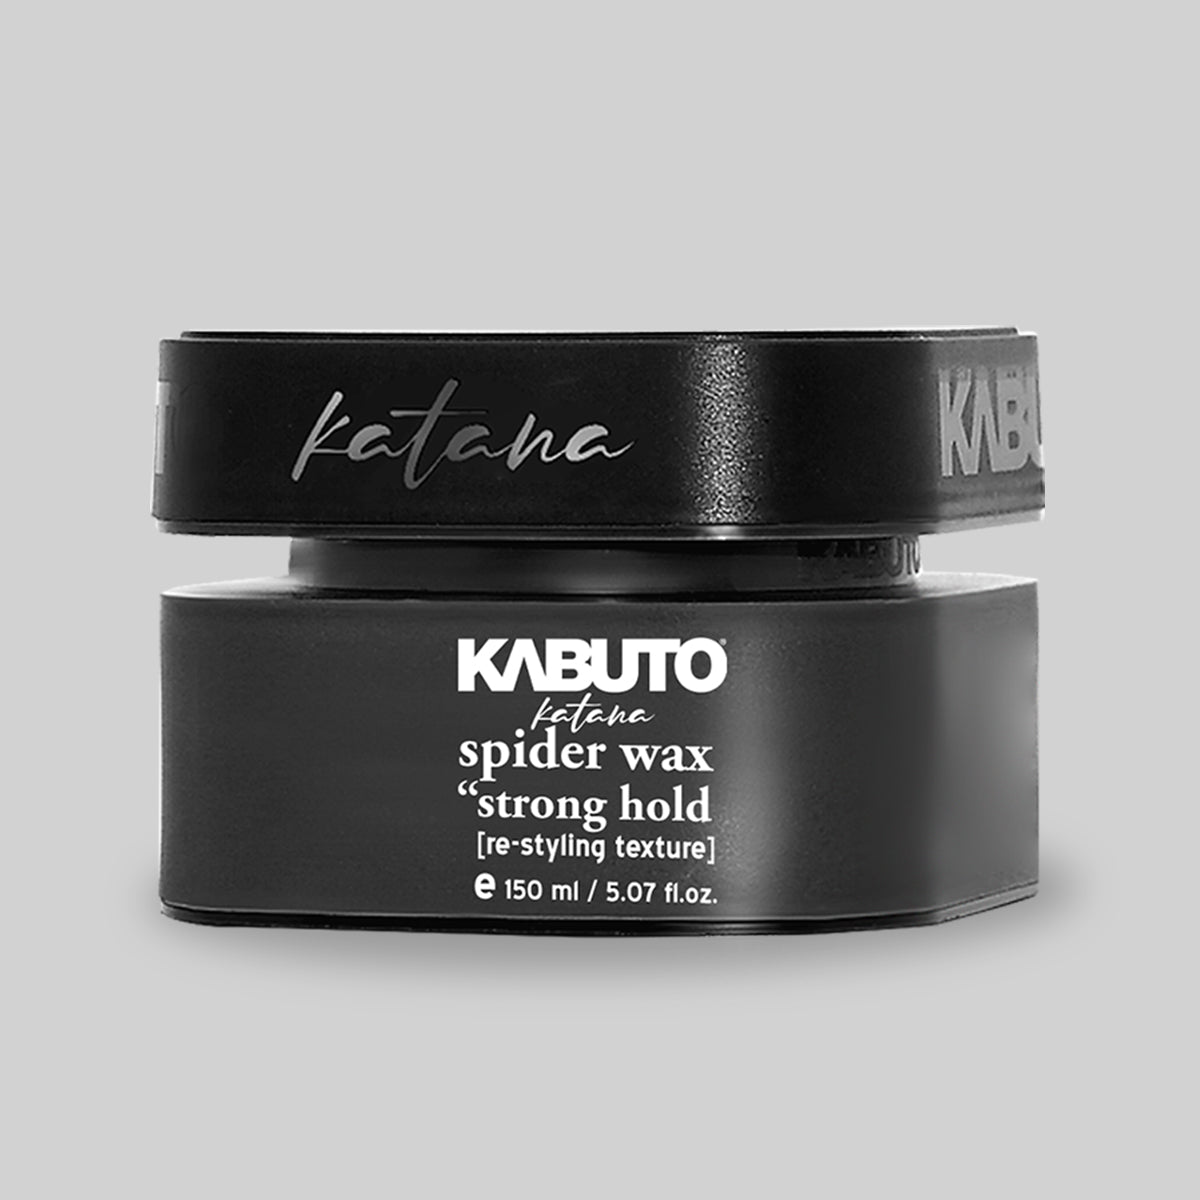 KABUTO Katana Spider Wax 150ml